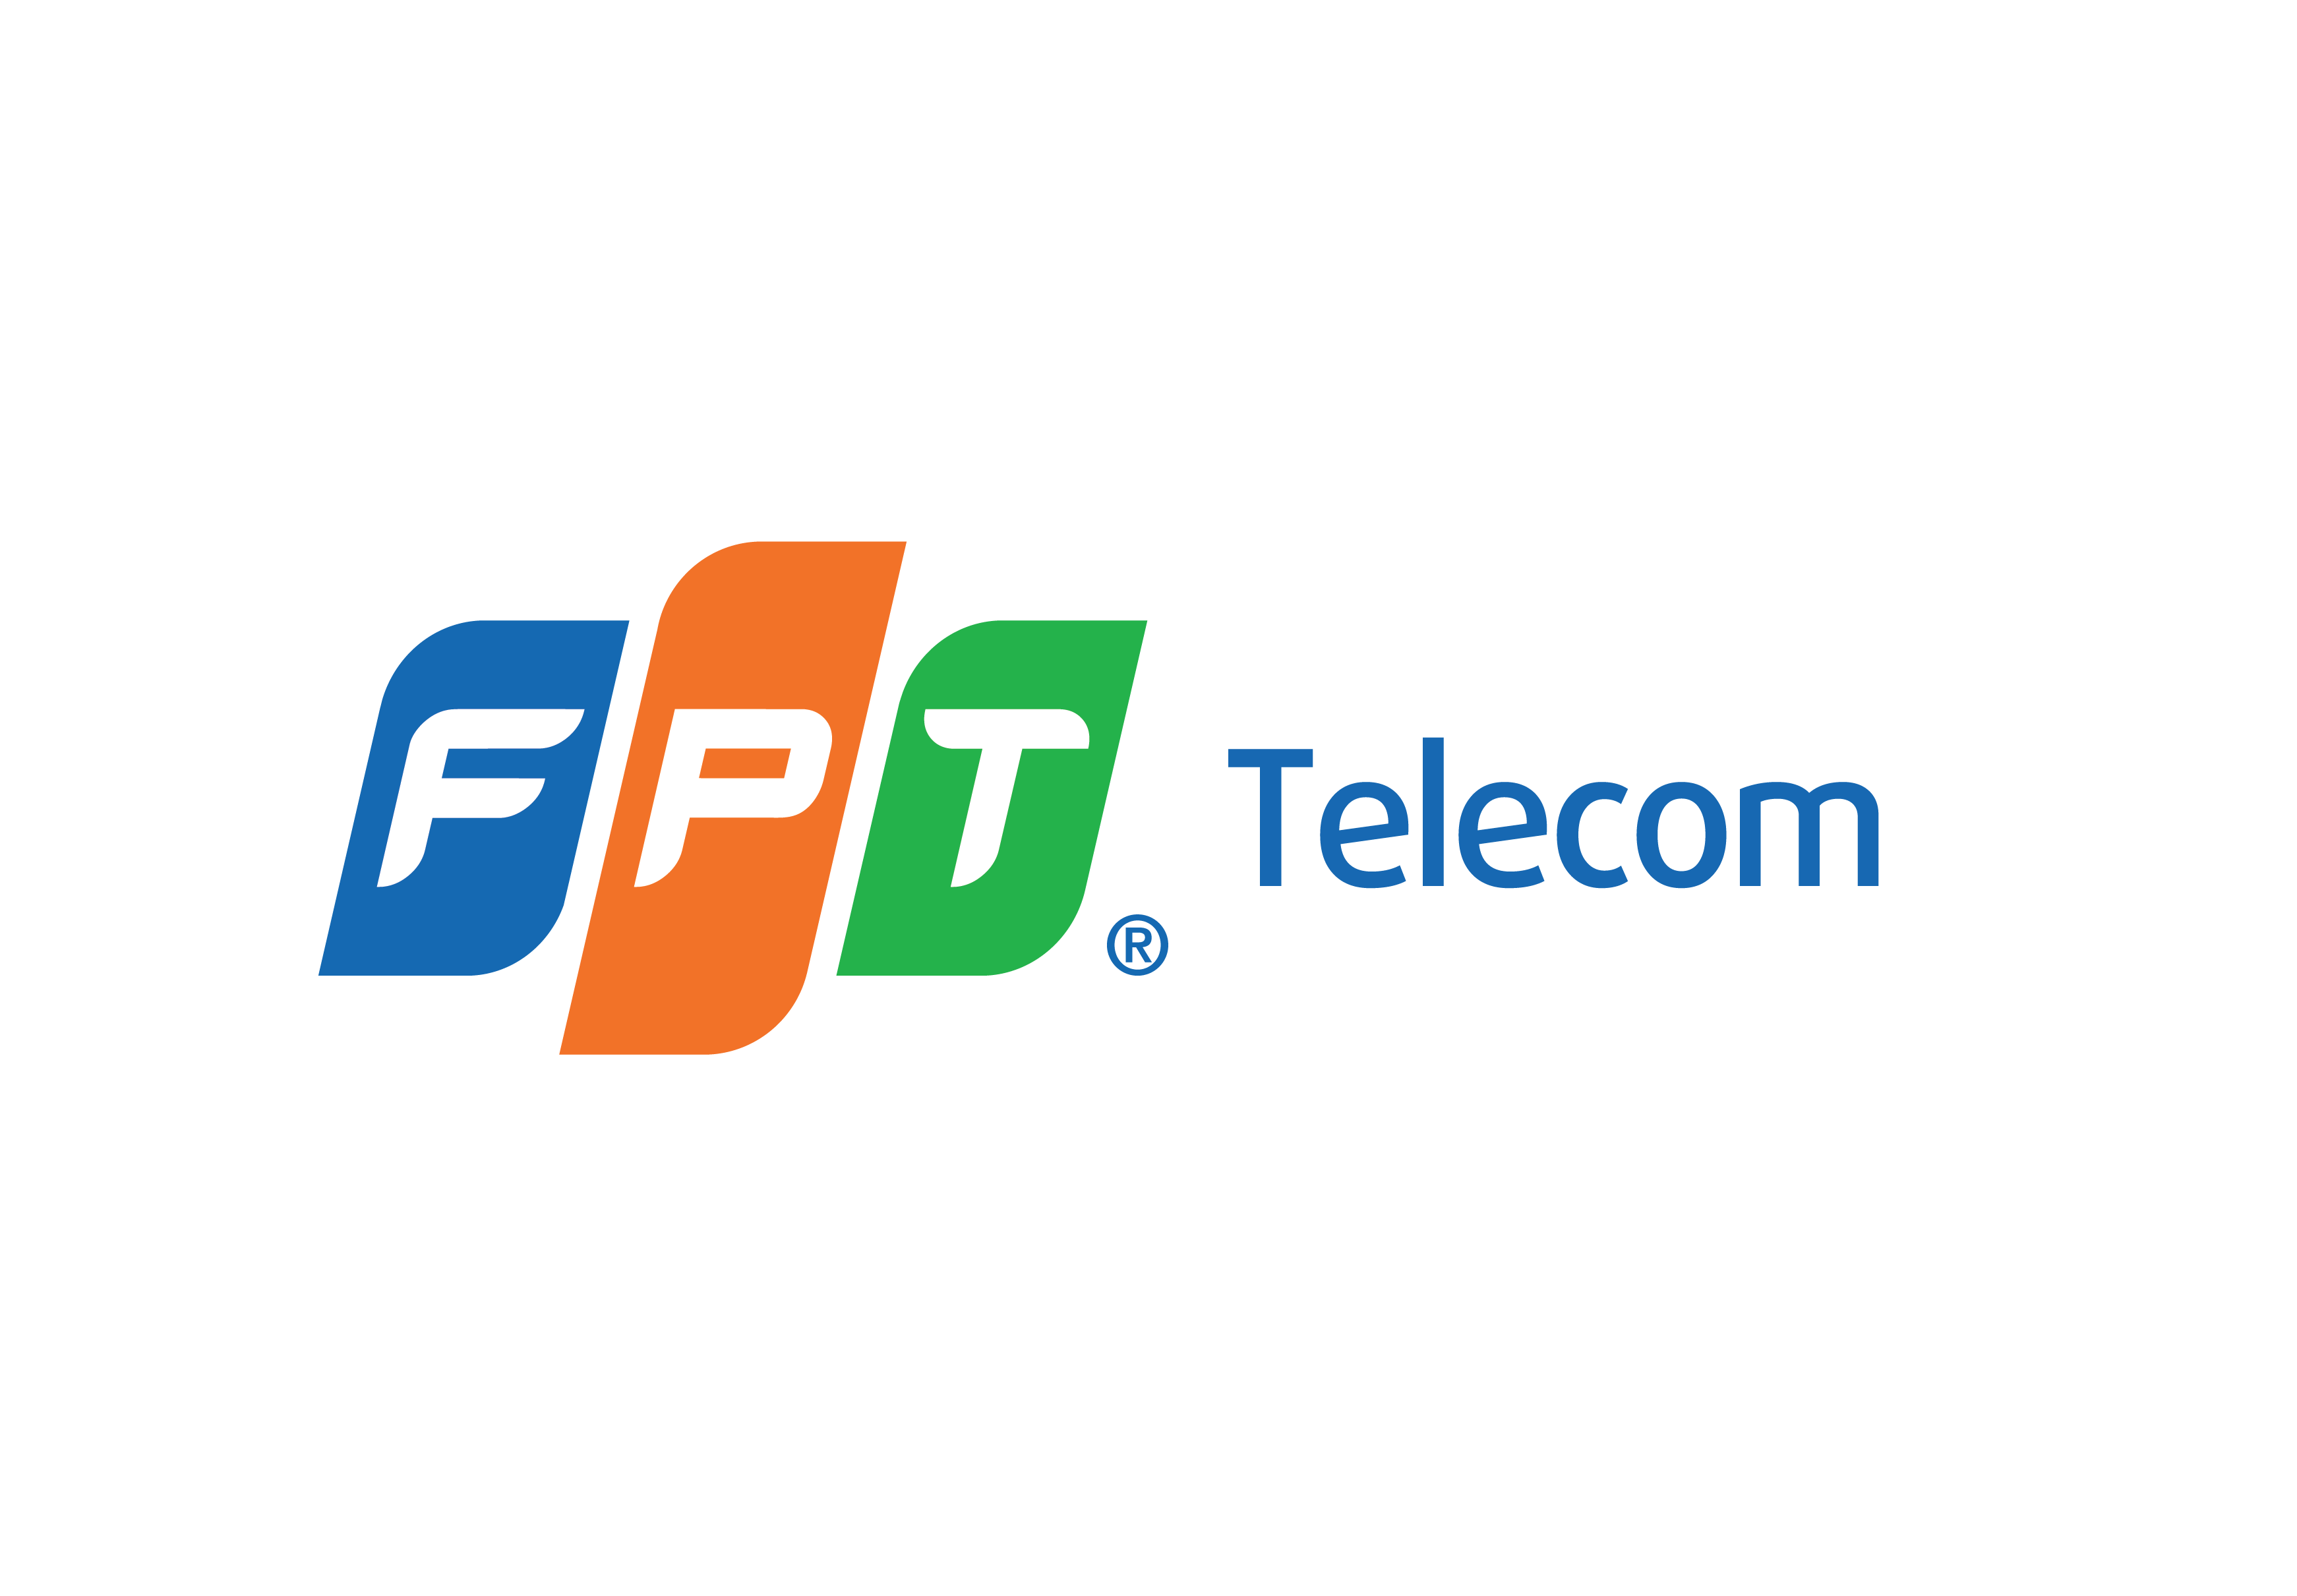 FPT Telecom Sóc Trăng